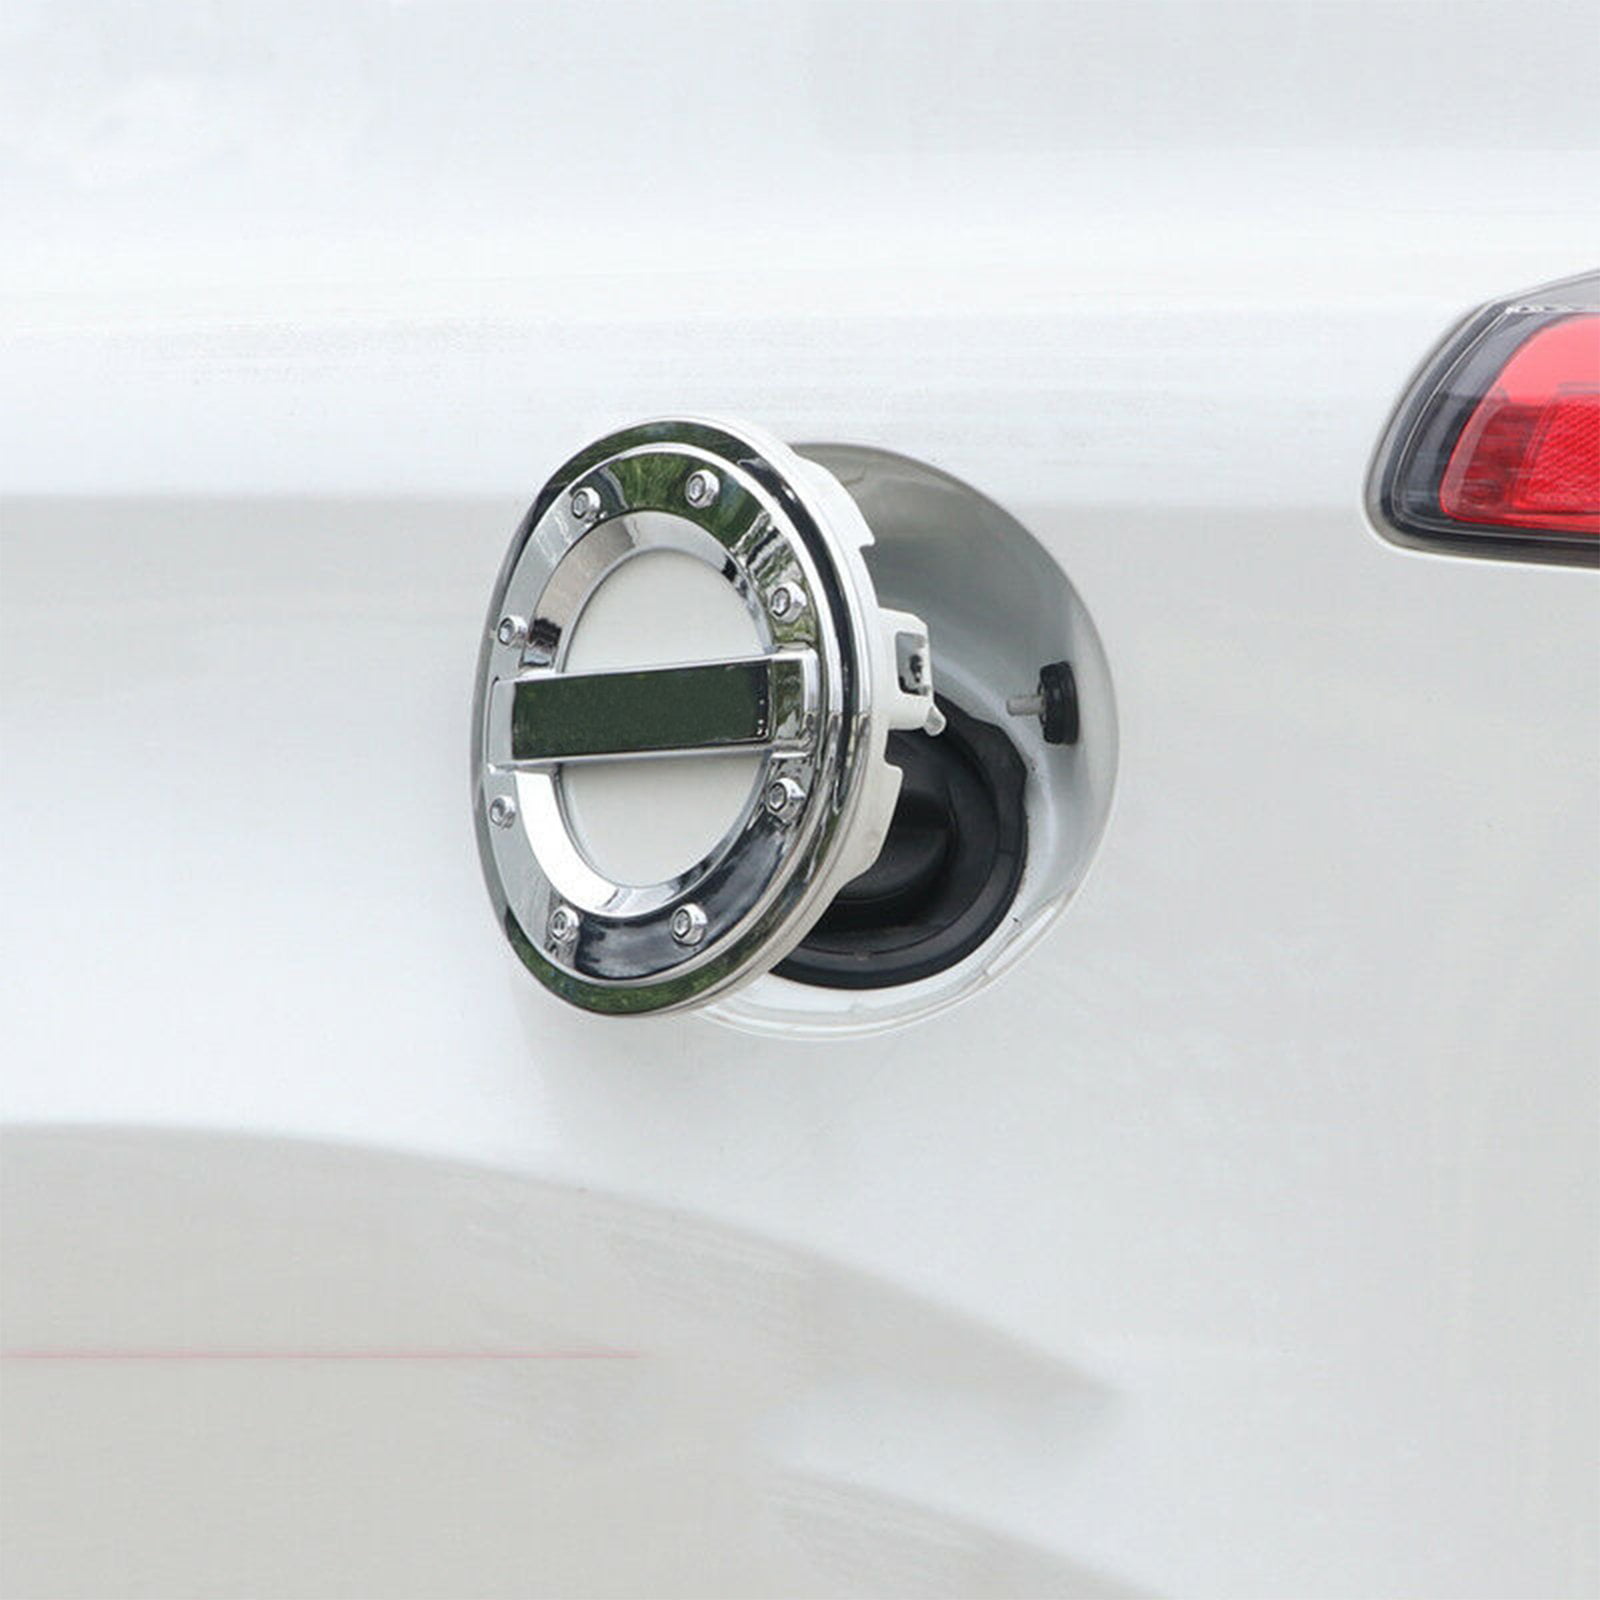 Xotic Tech ABS Chrome Gas Tank Cap Cover Protector Oil Fuel Filler Cap Garnish Trim for Toyota RAV4 2013-2018 